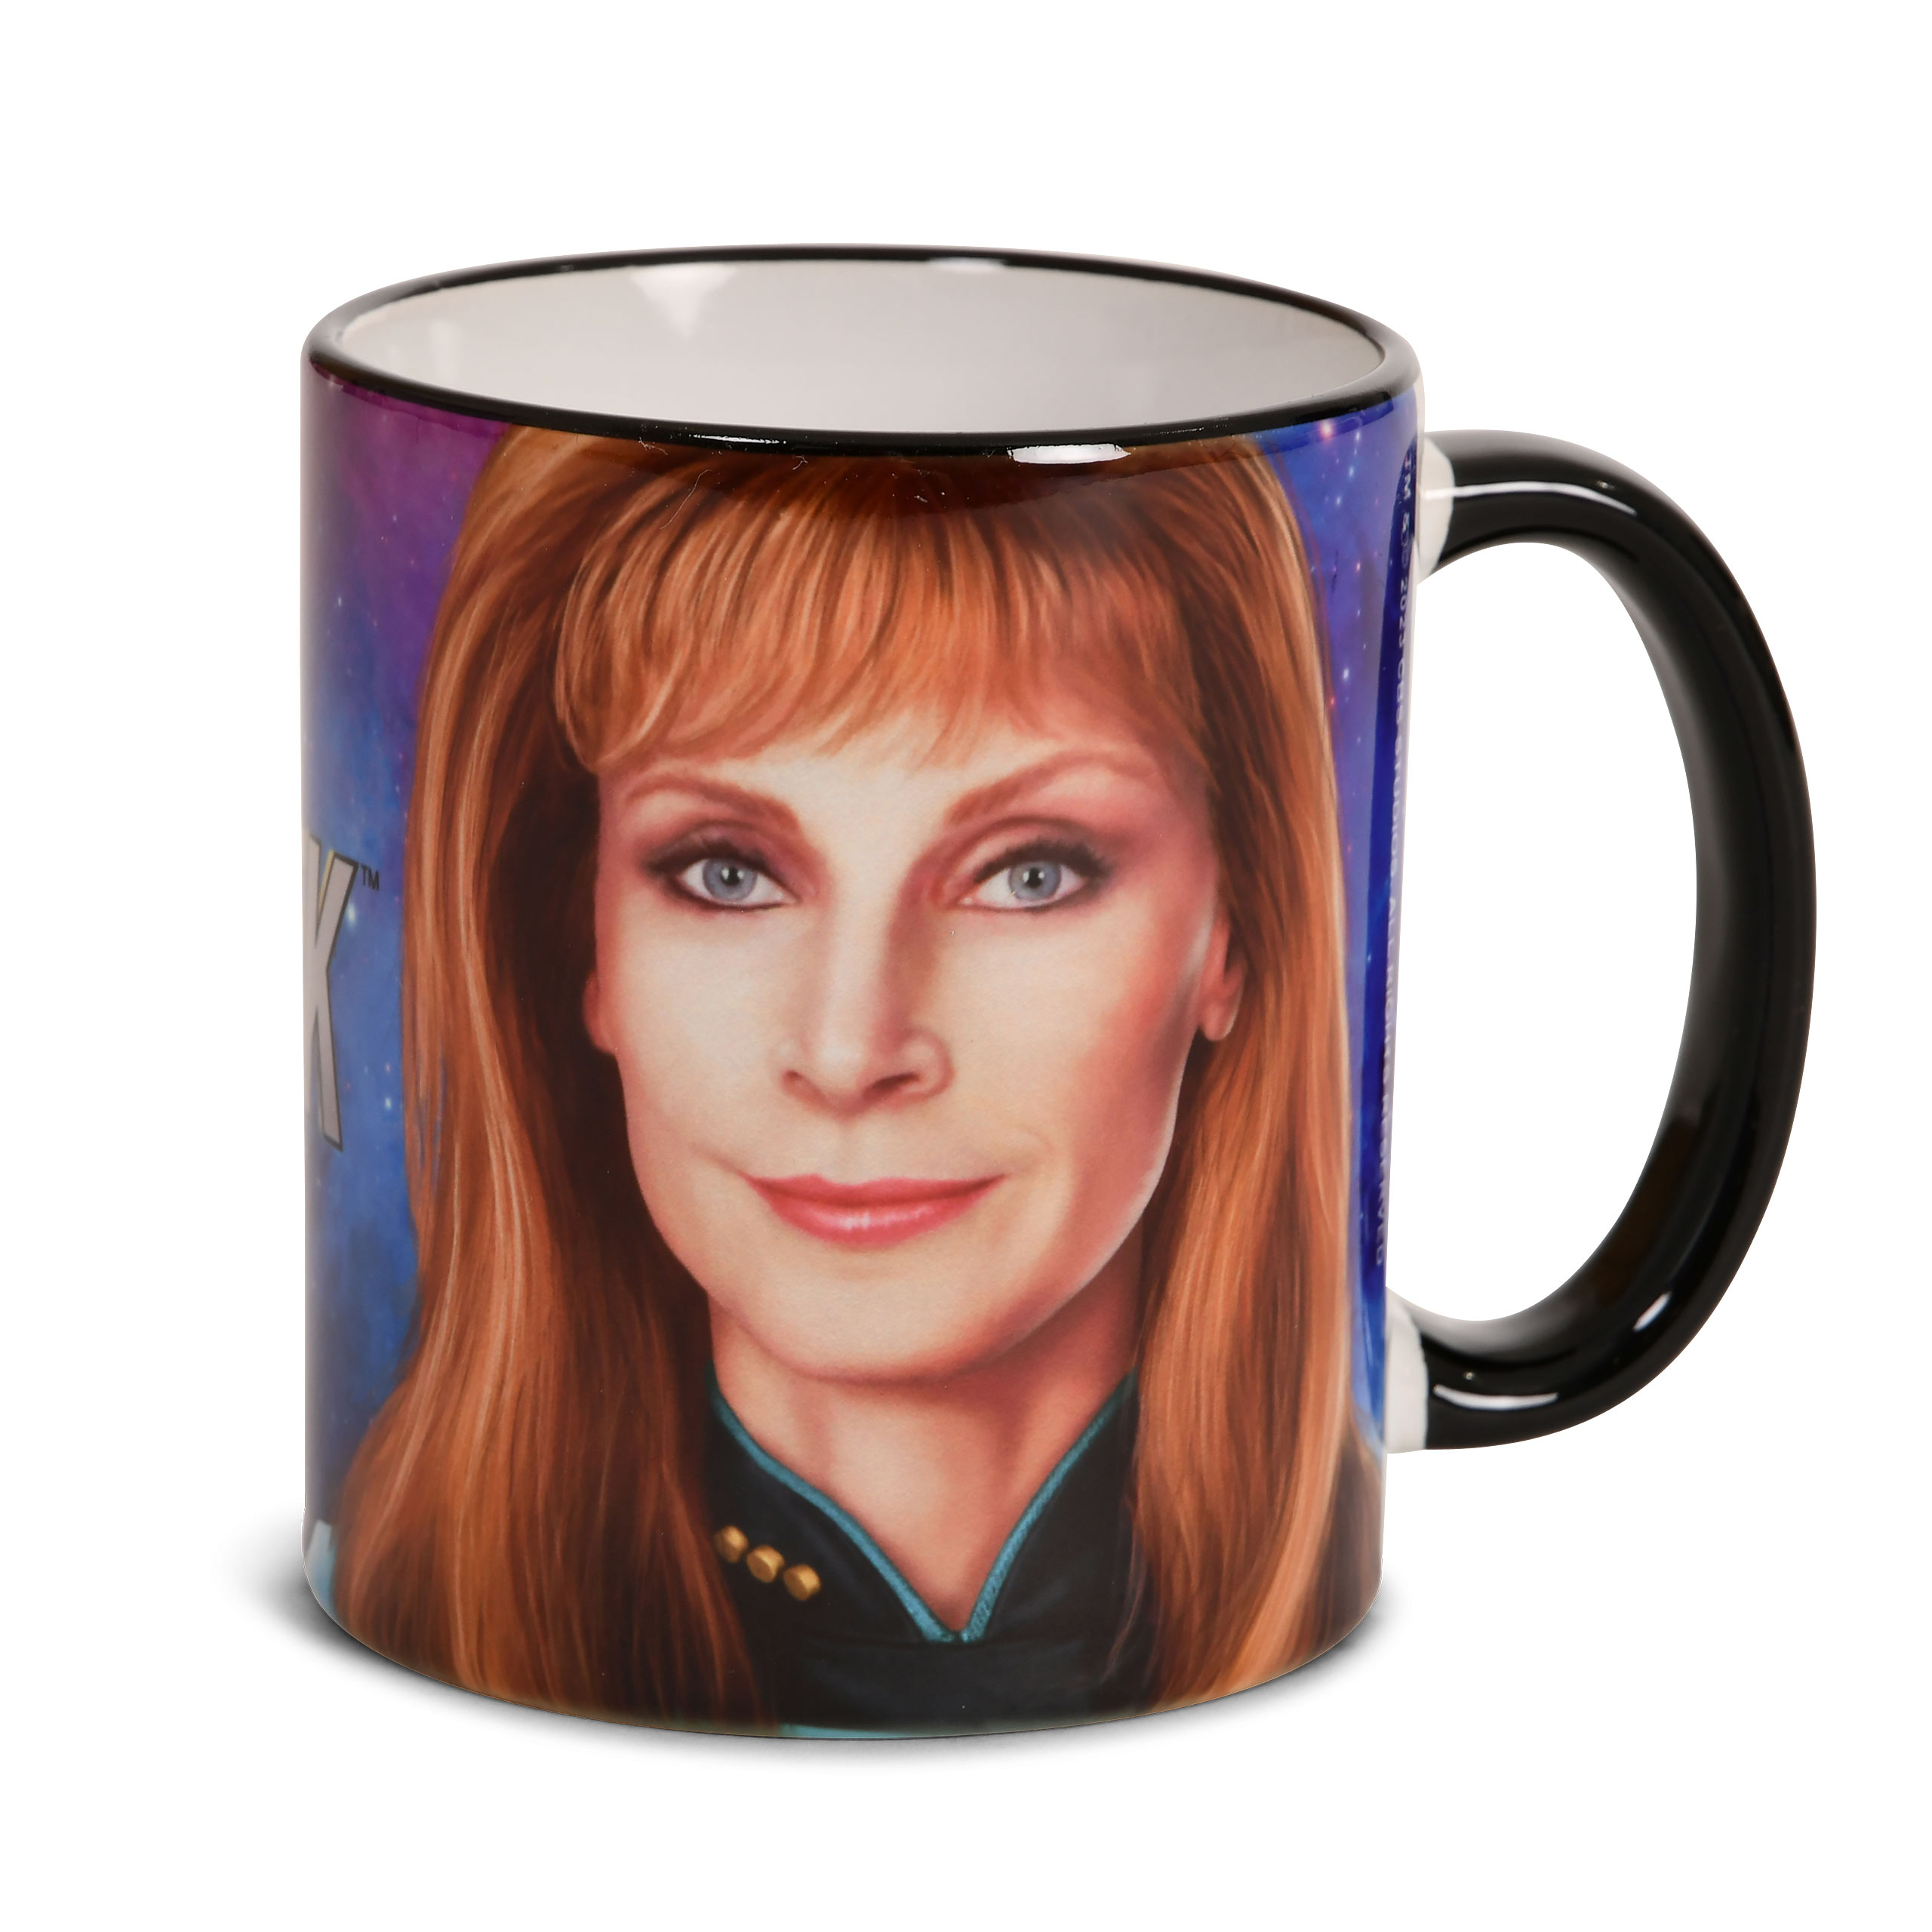 Star Trek - Dr. Crusher Mug